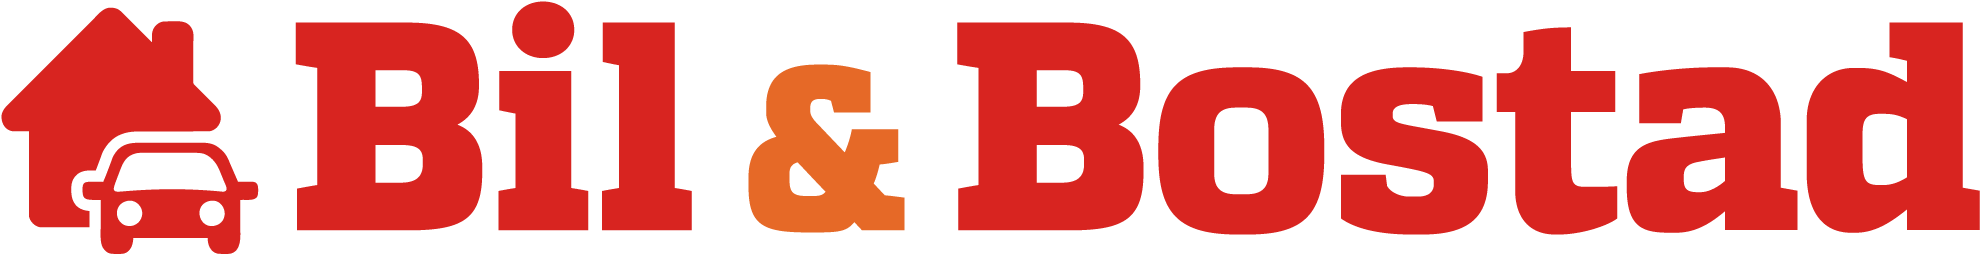 bob-logo-2016